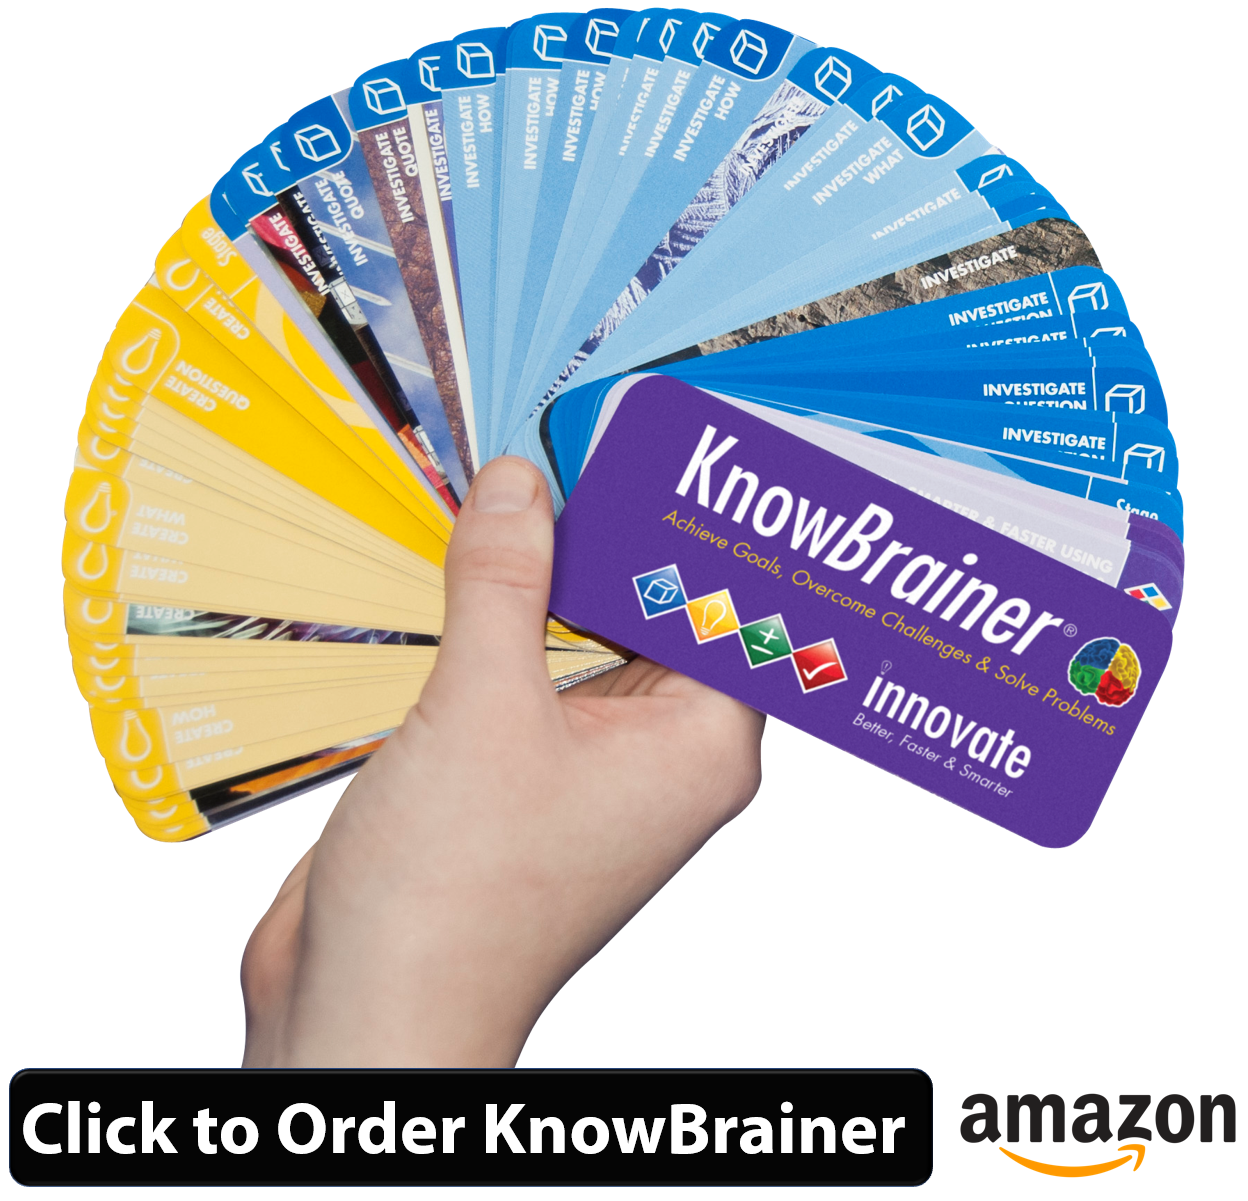 KnowBrainer Tools on Amazon